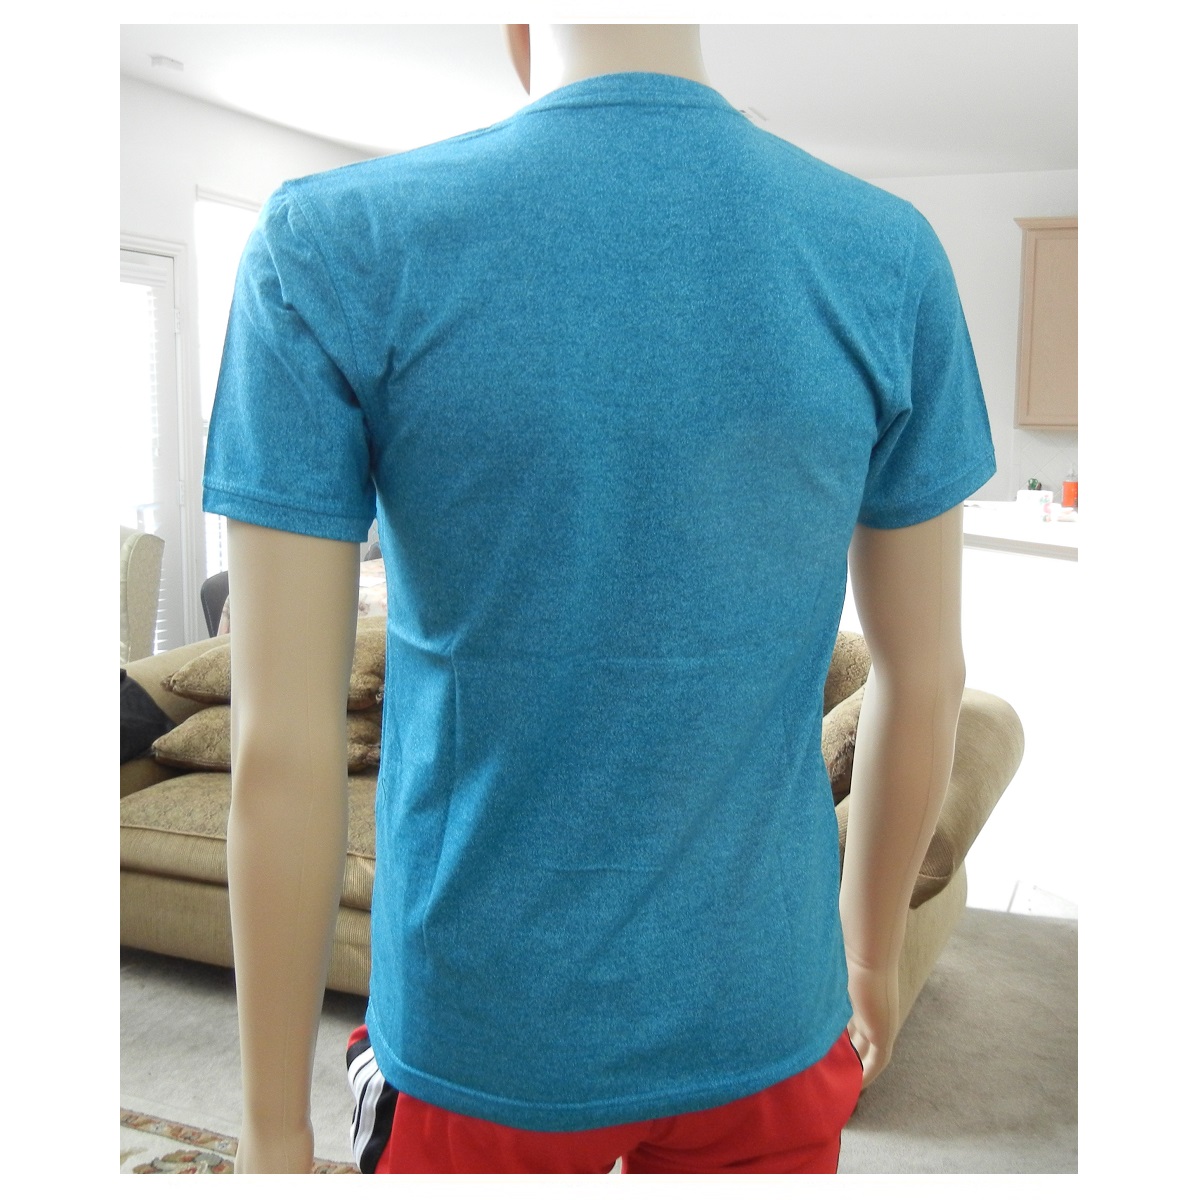 Men's T-Shirt, Short Sleeve V-Neck Cotton T-Shirt Basic Plain T-Shirt for men, Heather blue